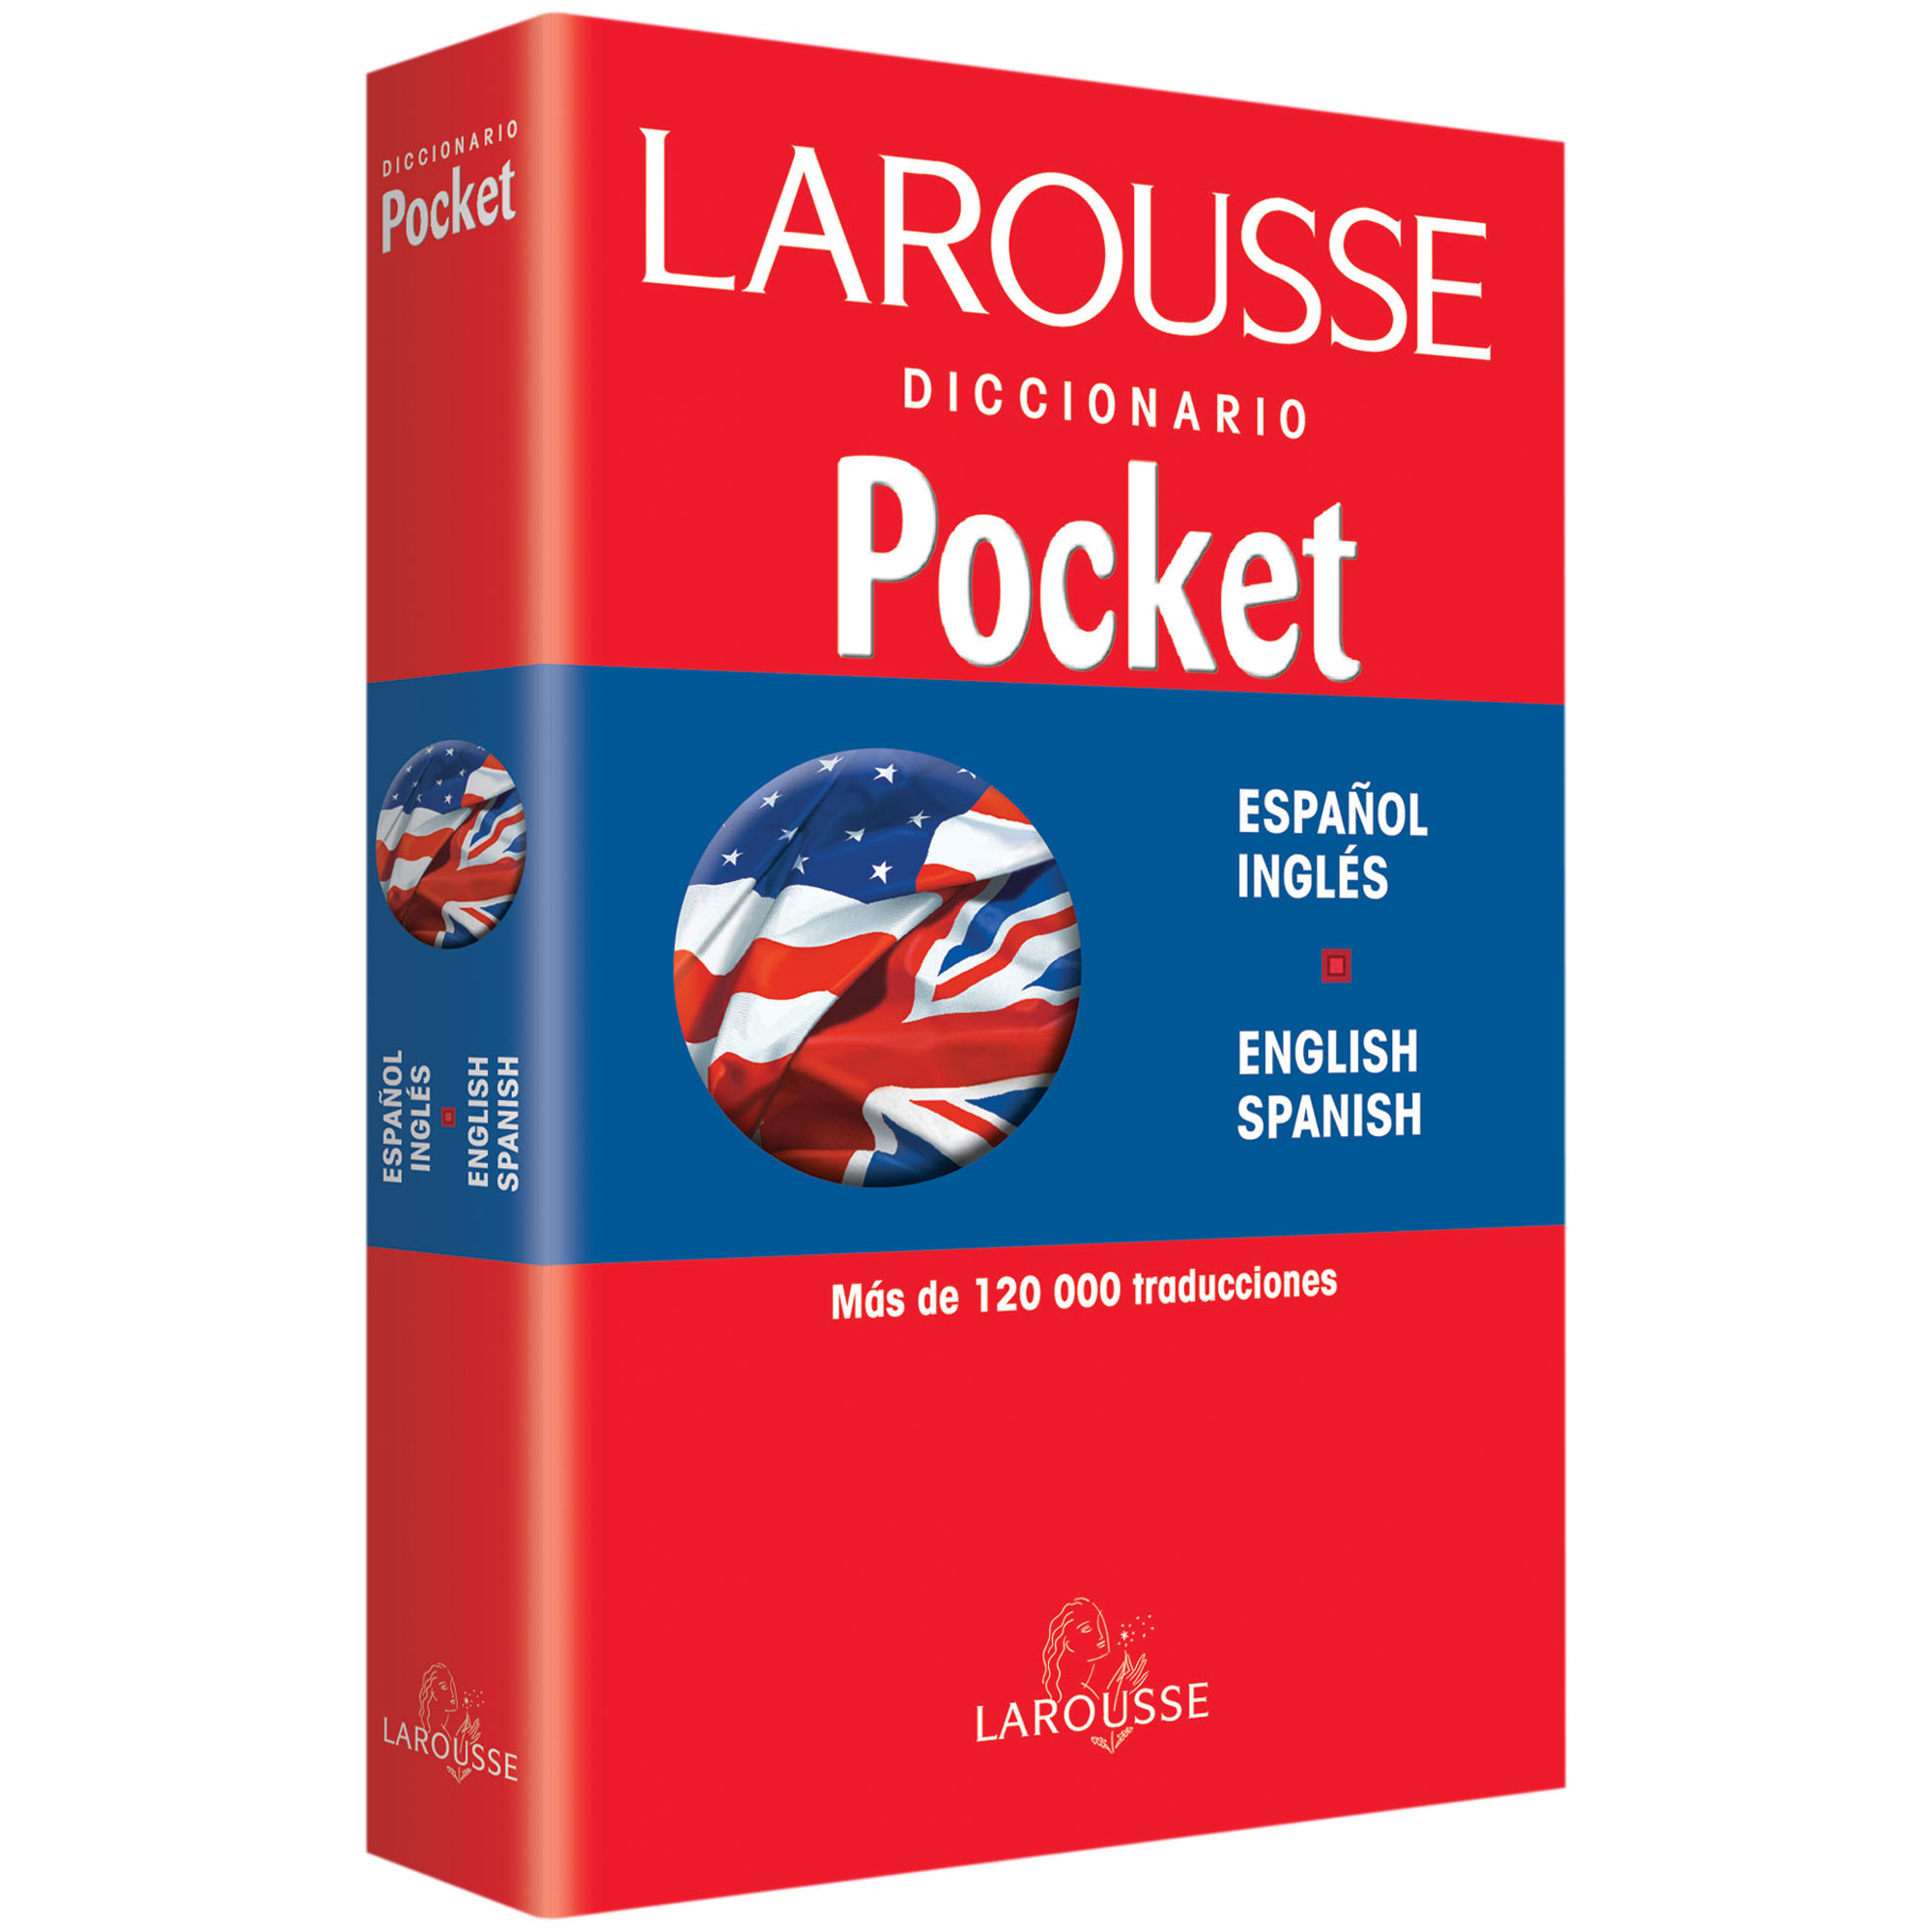 Diccionario Pocket Español Ingles Larousse Delsol